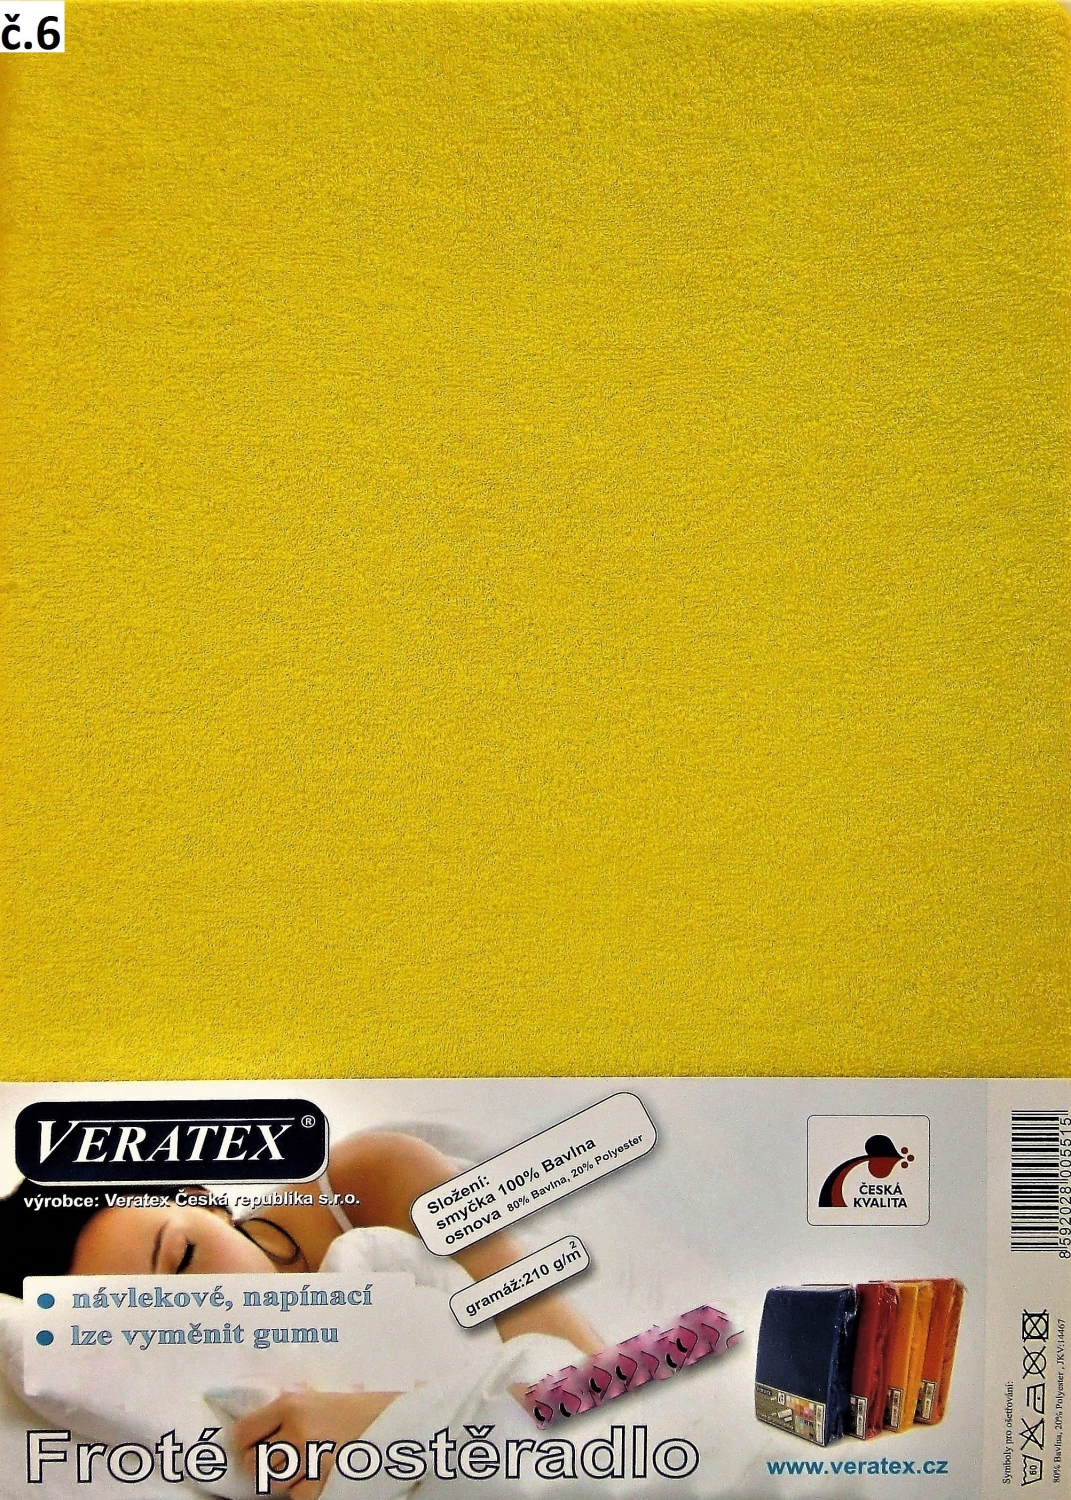 Veratex Froté prostěradlo postýlka 60 x 120 cm (č. 6-stř.žlutá)